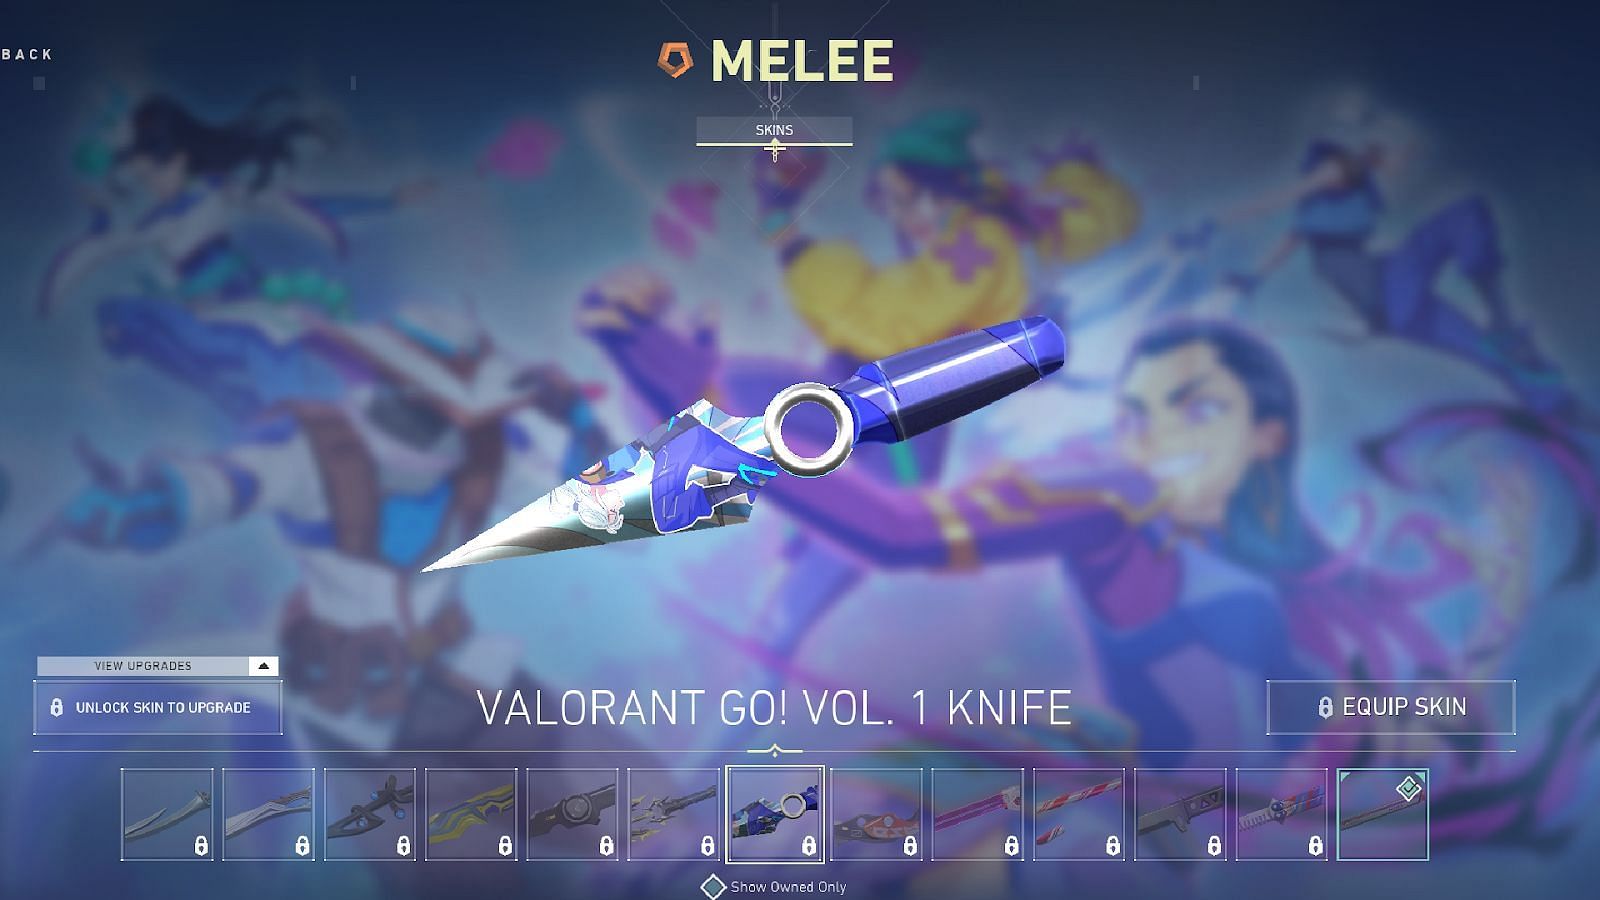 Valorant GO! Vol. 1 Knife (Image via Riot Games)